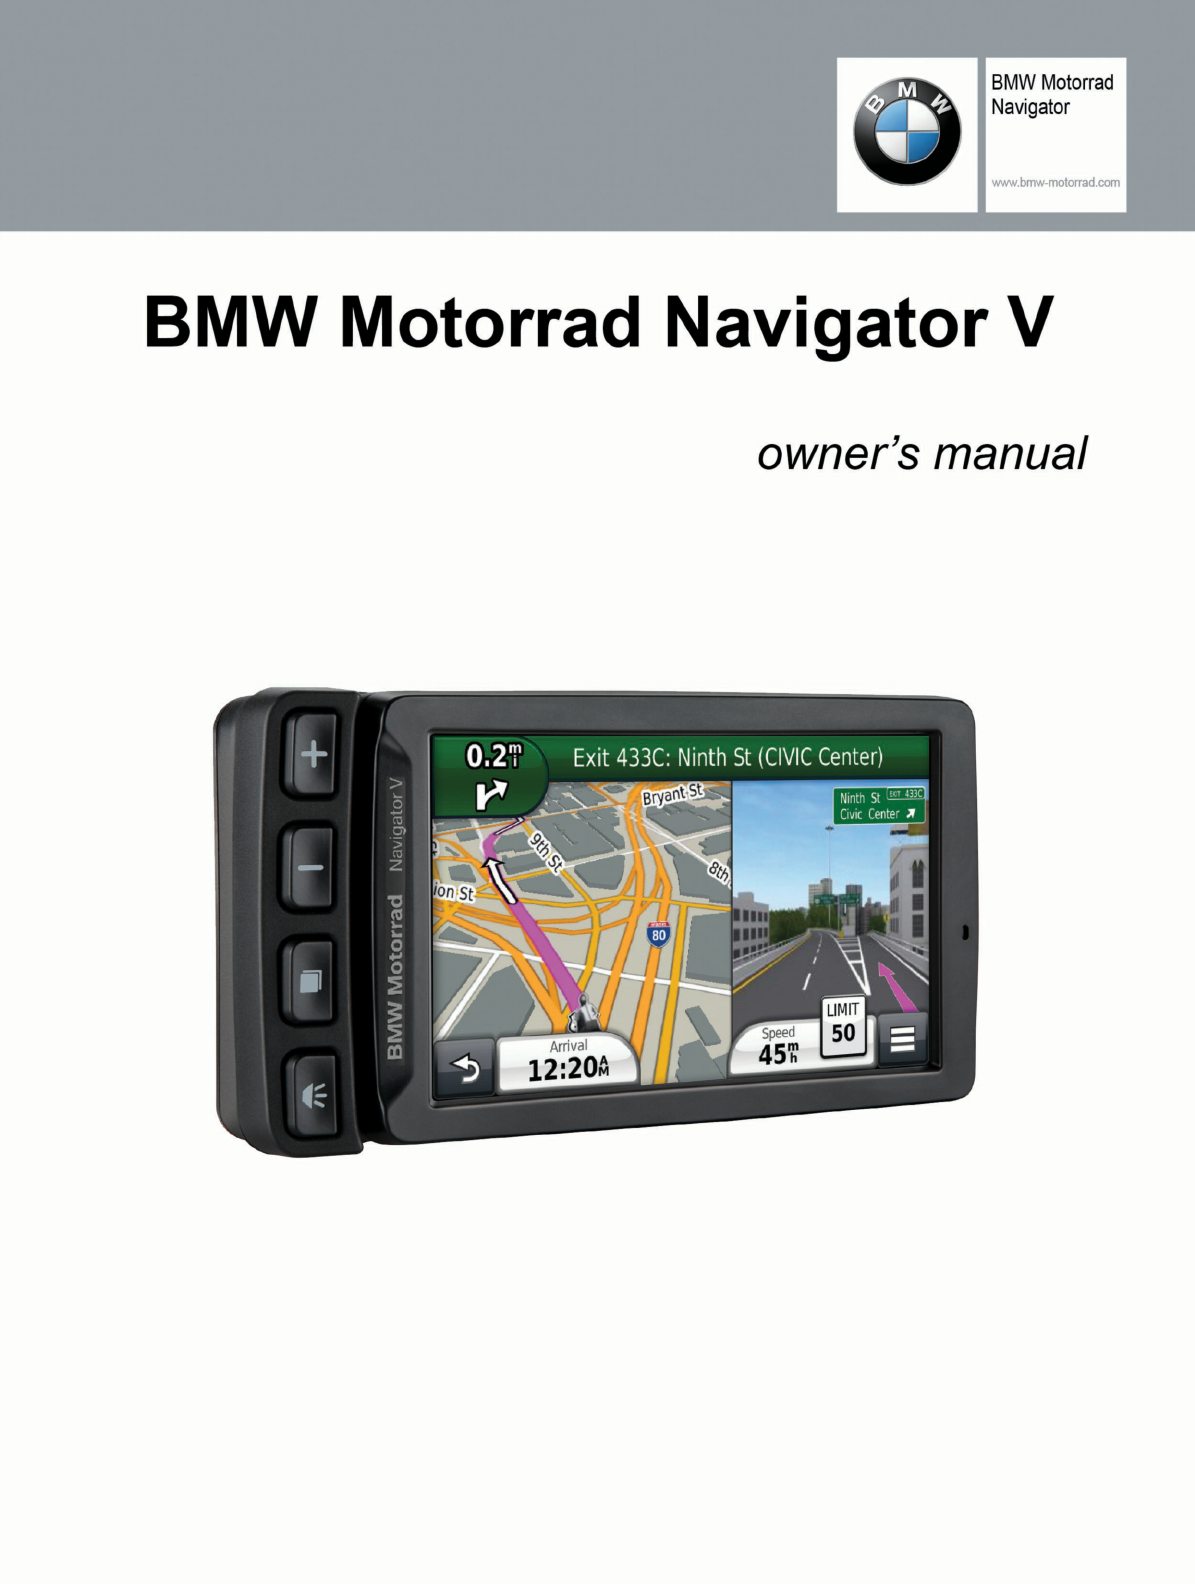 Handleiding BMW Navigator V (pagina 1 van 22) (English)